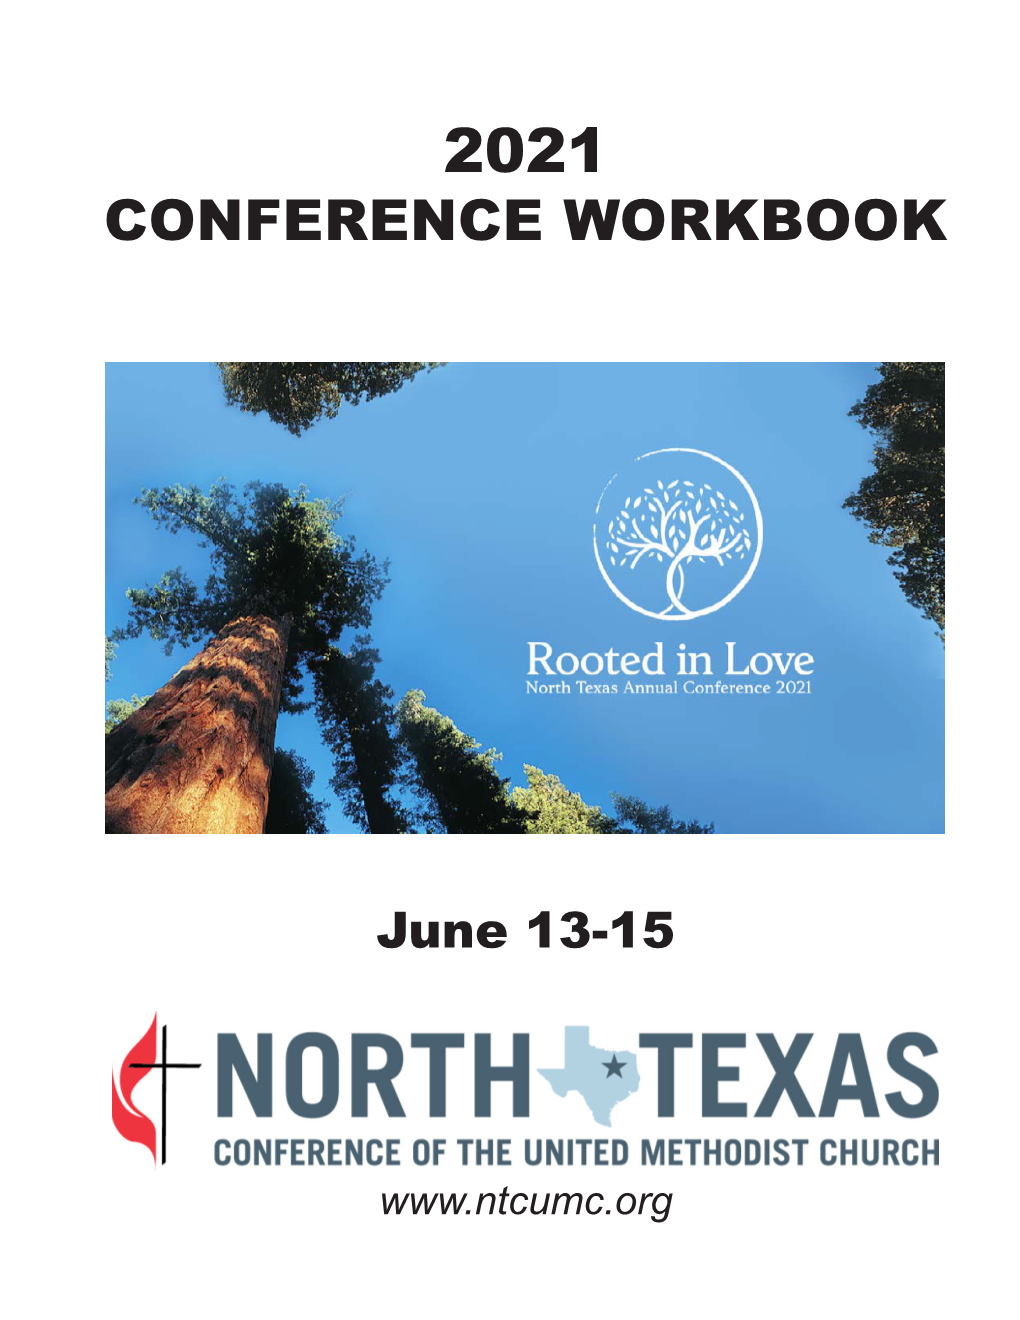 Conference Workbook